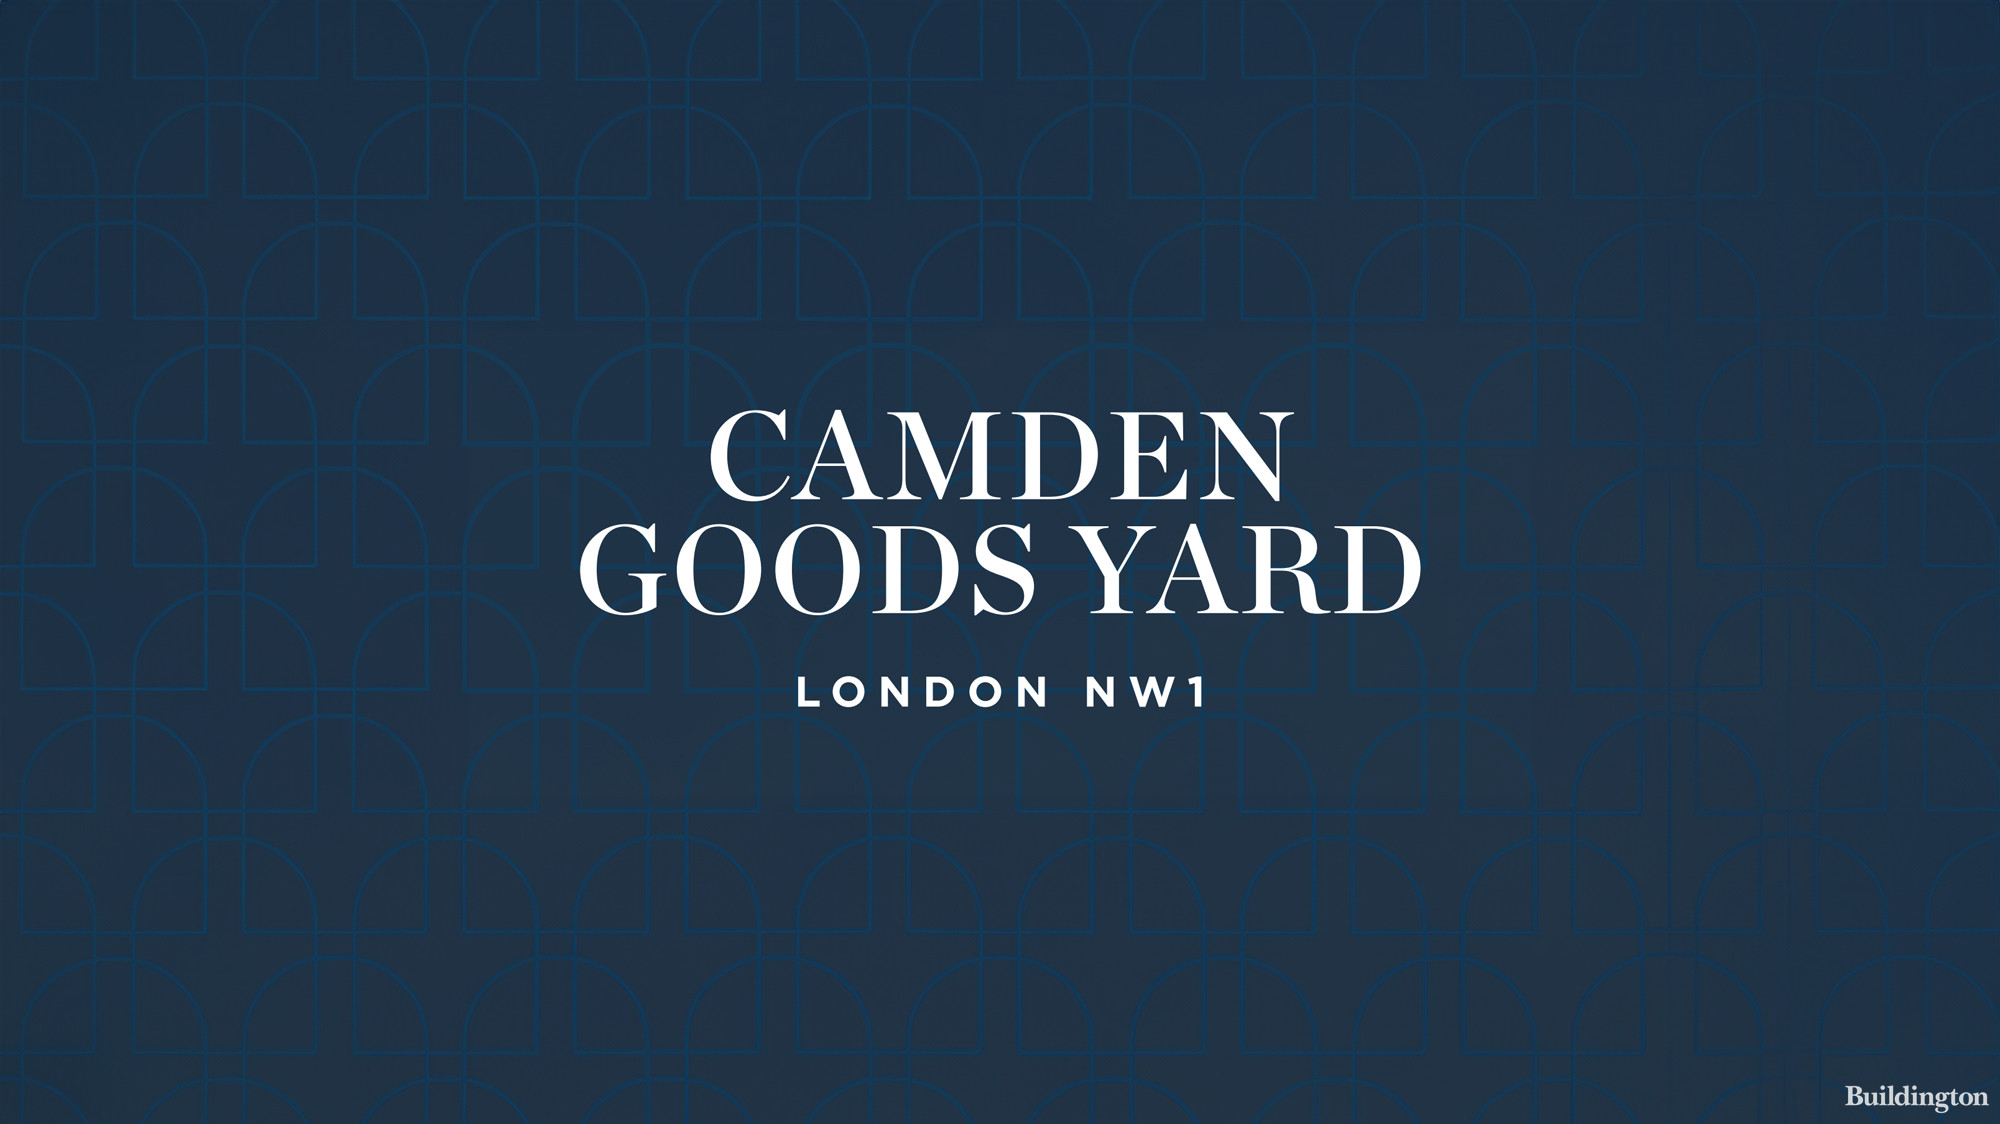 Camden Goods Yard development logo cover